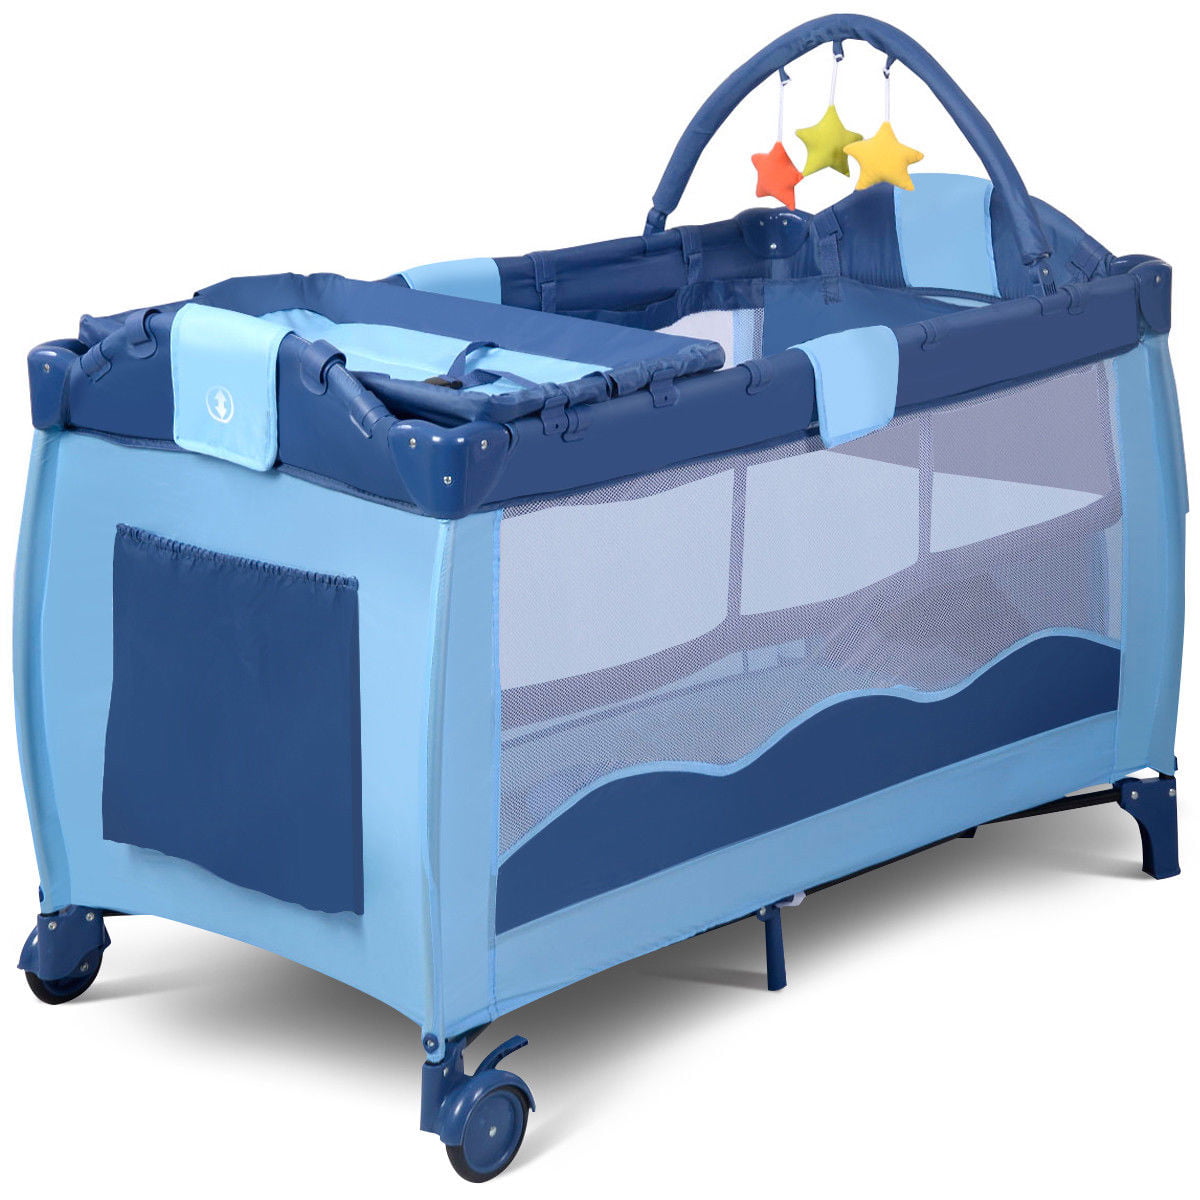 blue baby crib